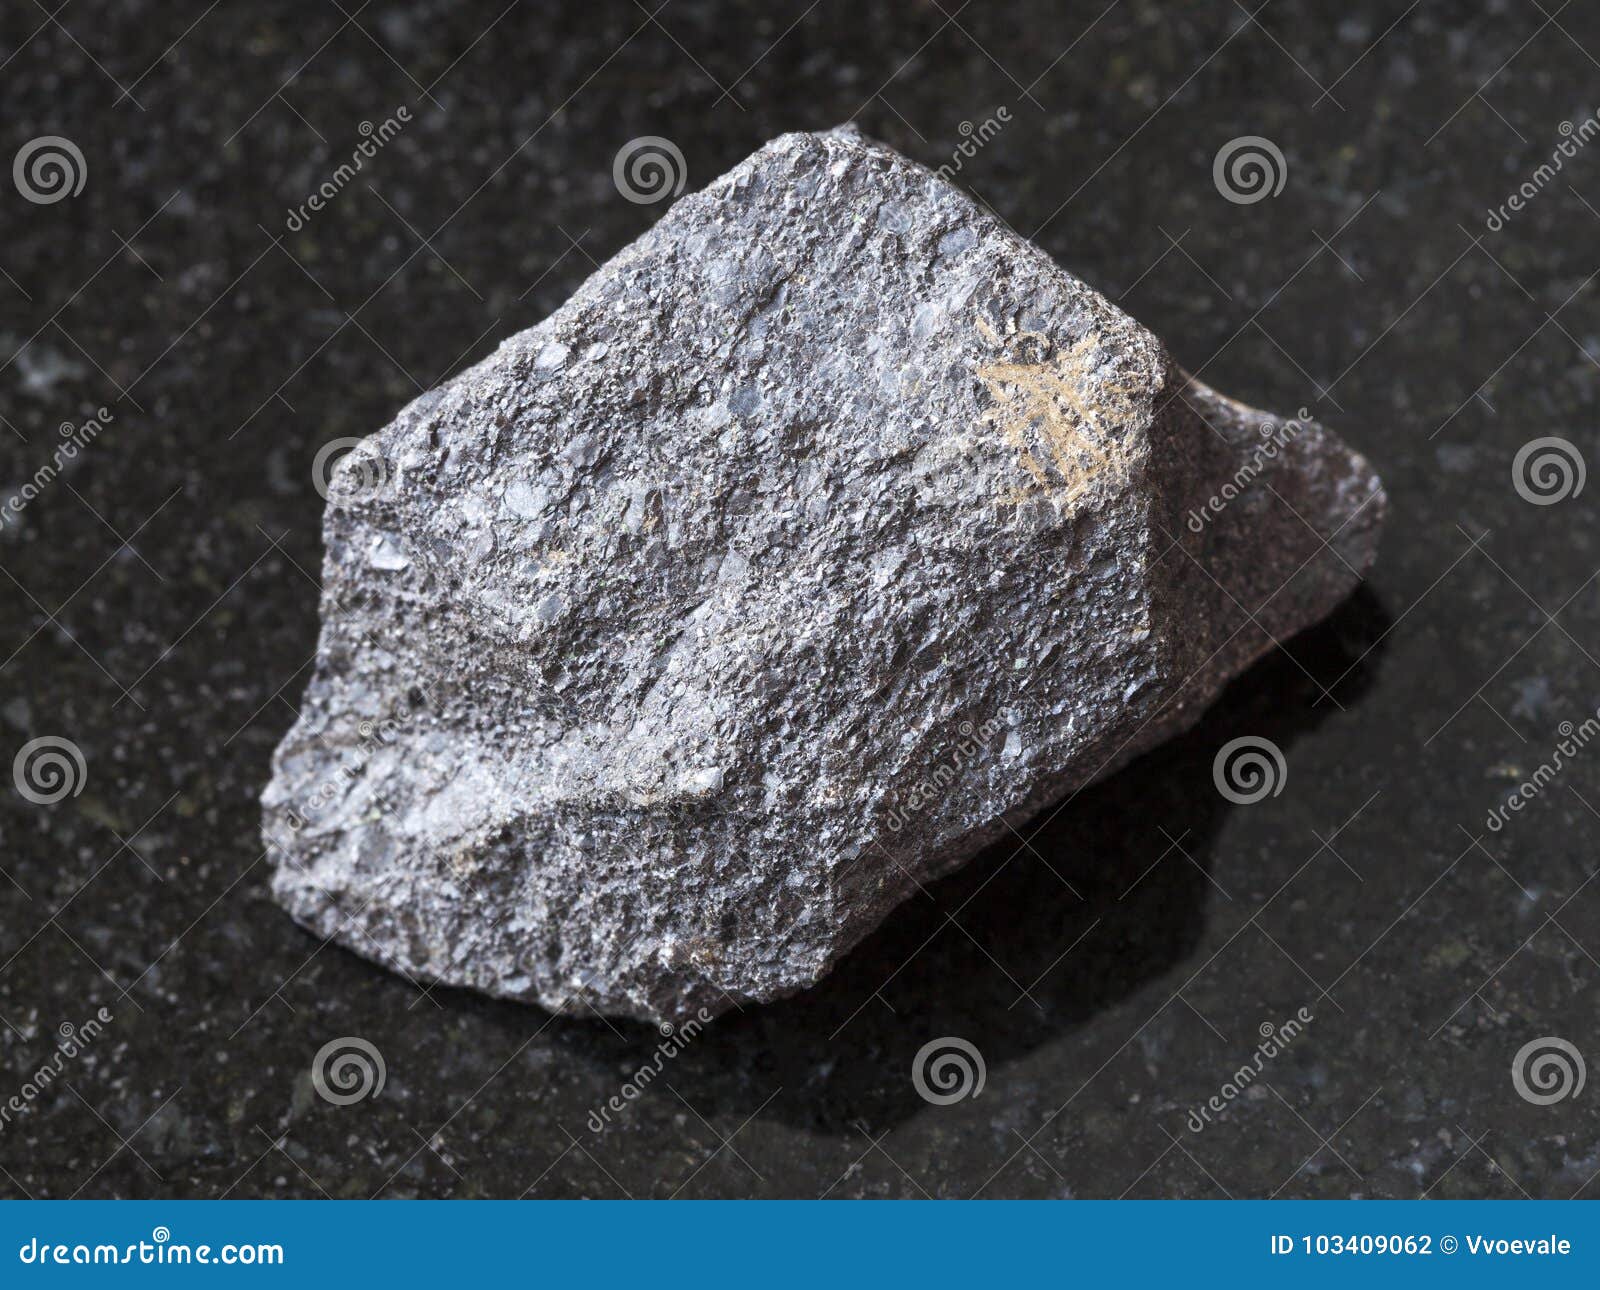 raw chromite stone on dark background